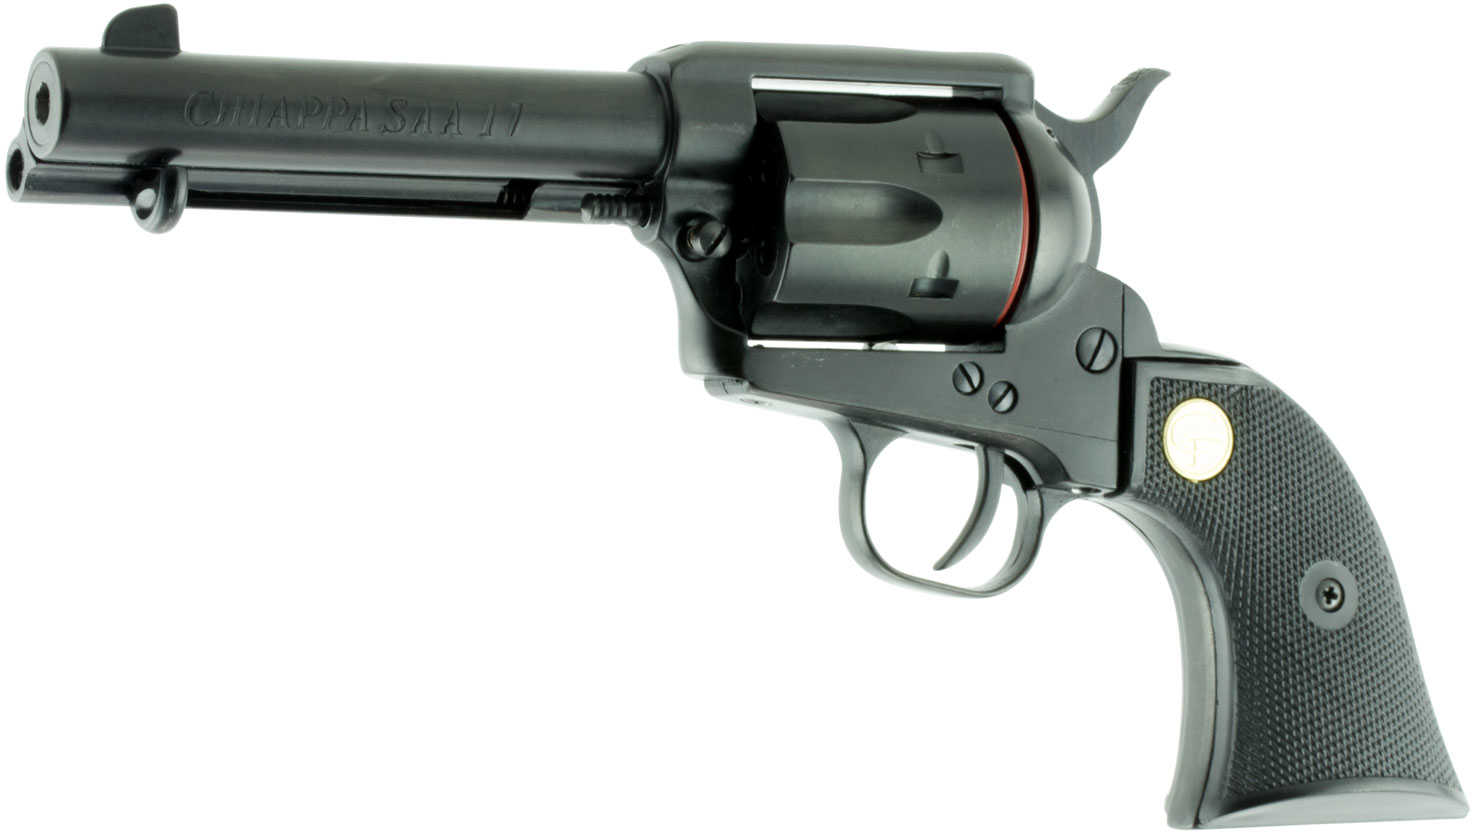 Chiappa 1873 Single Action 17 HMR Revolver 4.75" Barrel 6 Round Plastic Grips Black Finish